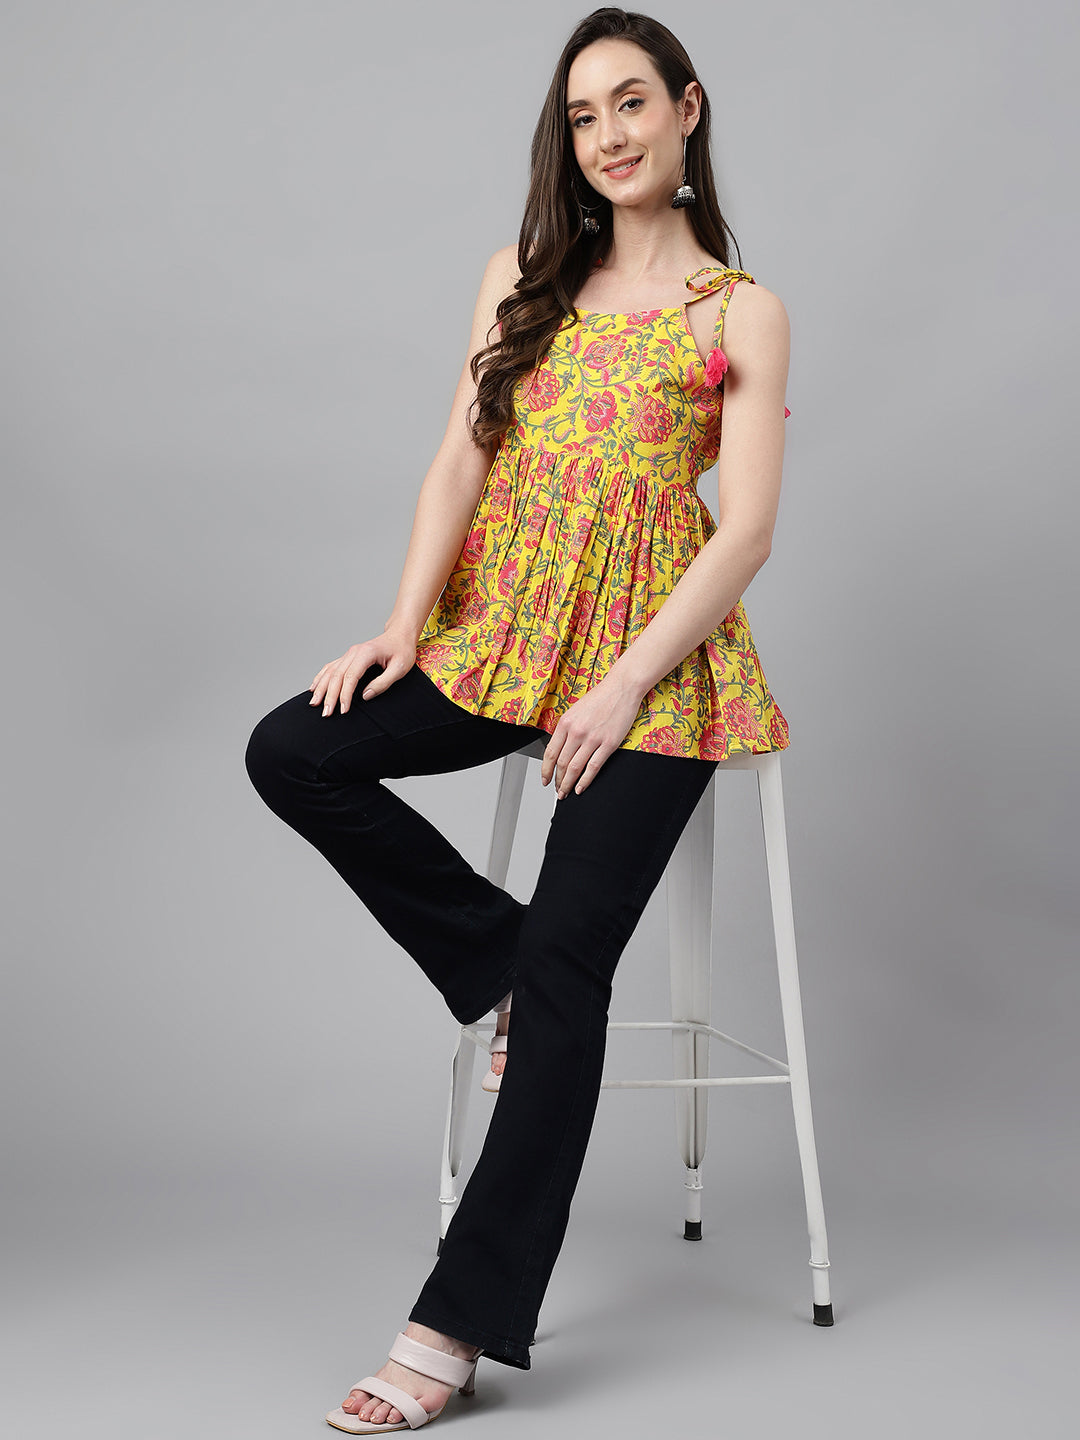 Women's Floral Print Yellow Cotton Tops - Janasya